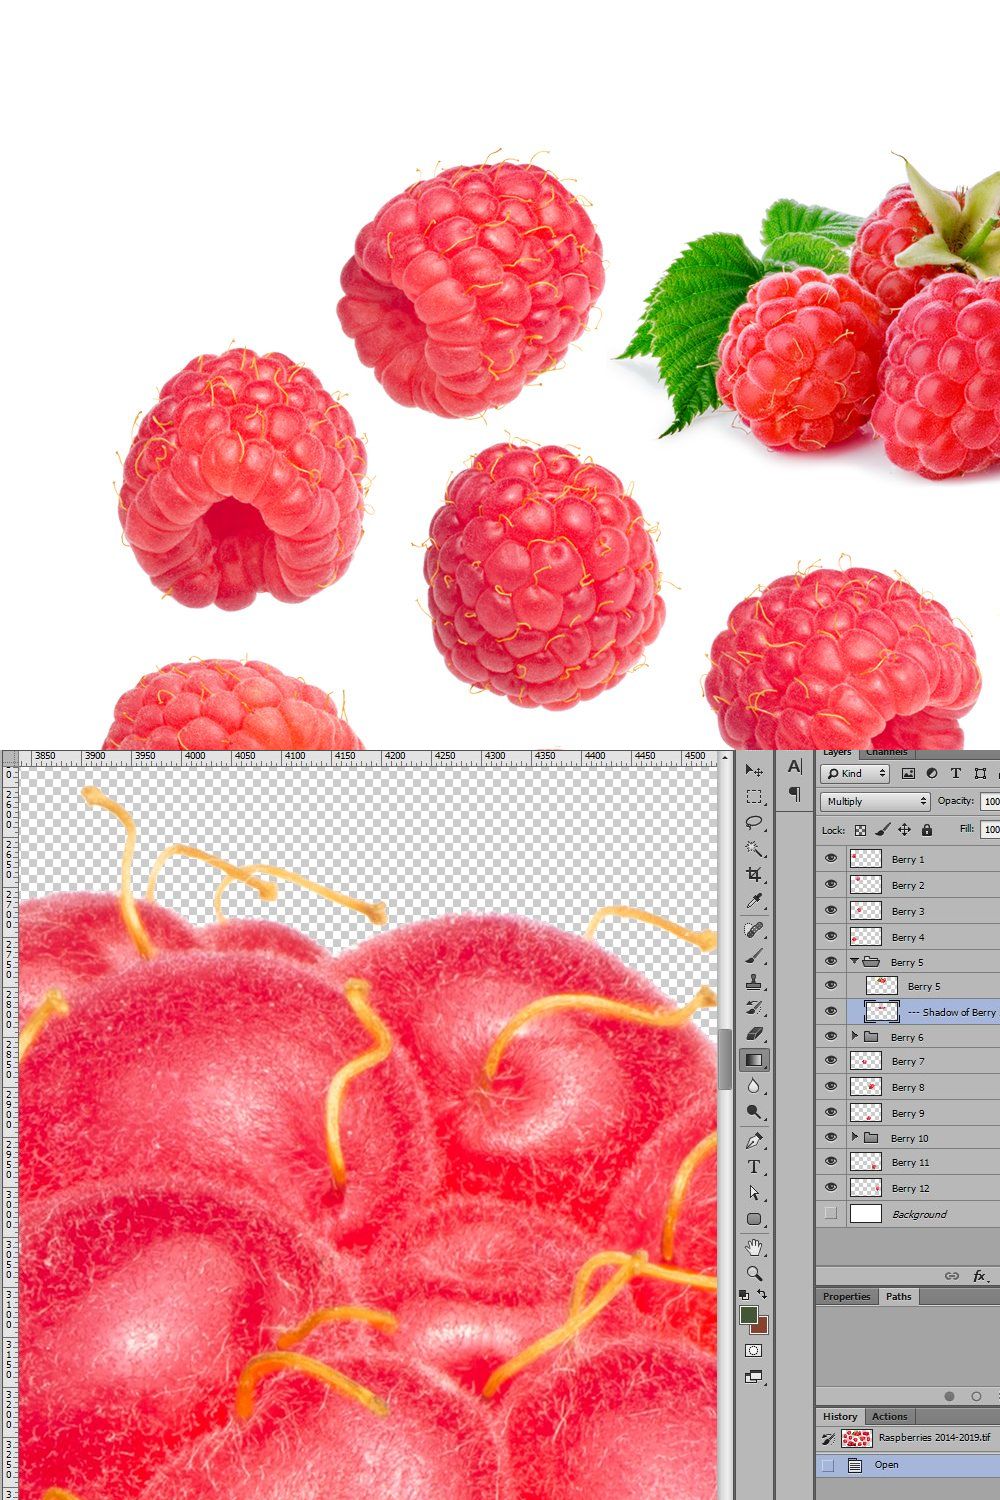 Raspberries pinterest preview image.